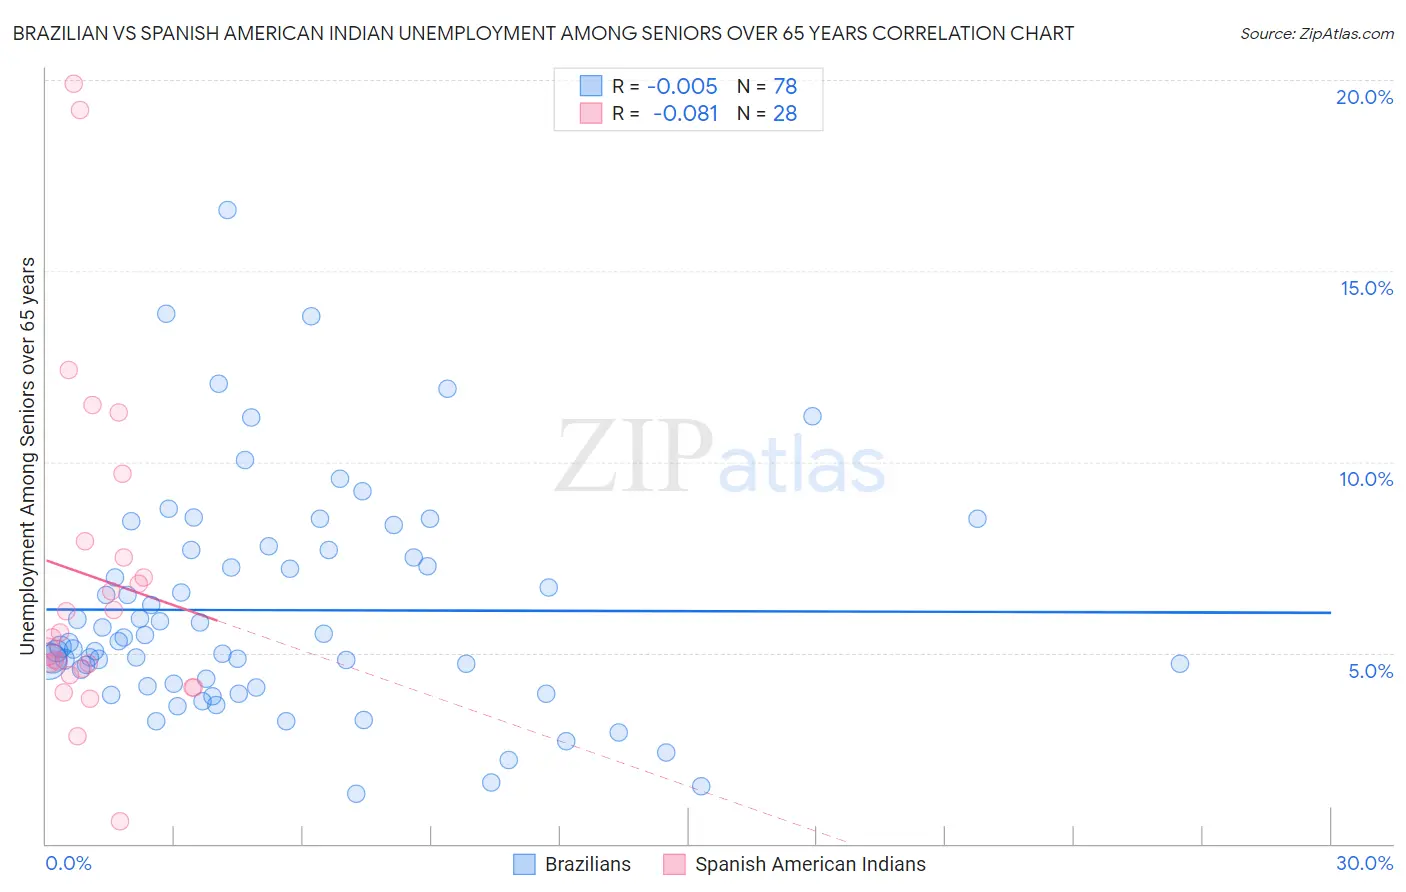 Brazilian vs Spanish American Indian Unemployment Among Seniors over 65 years